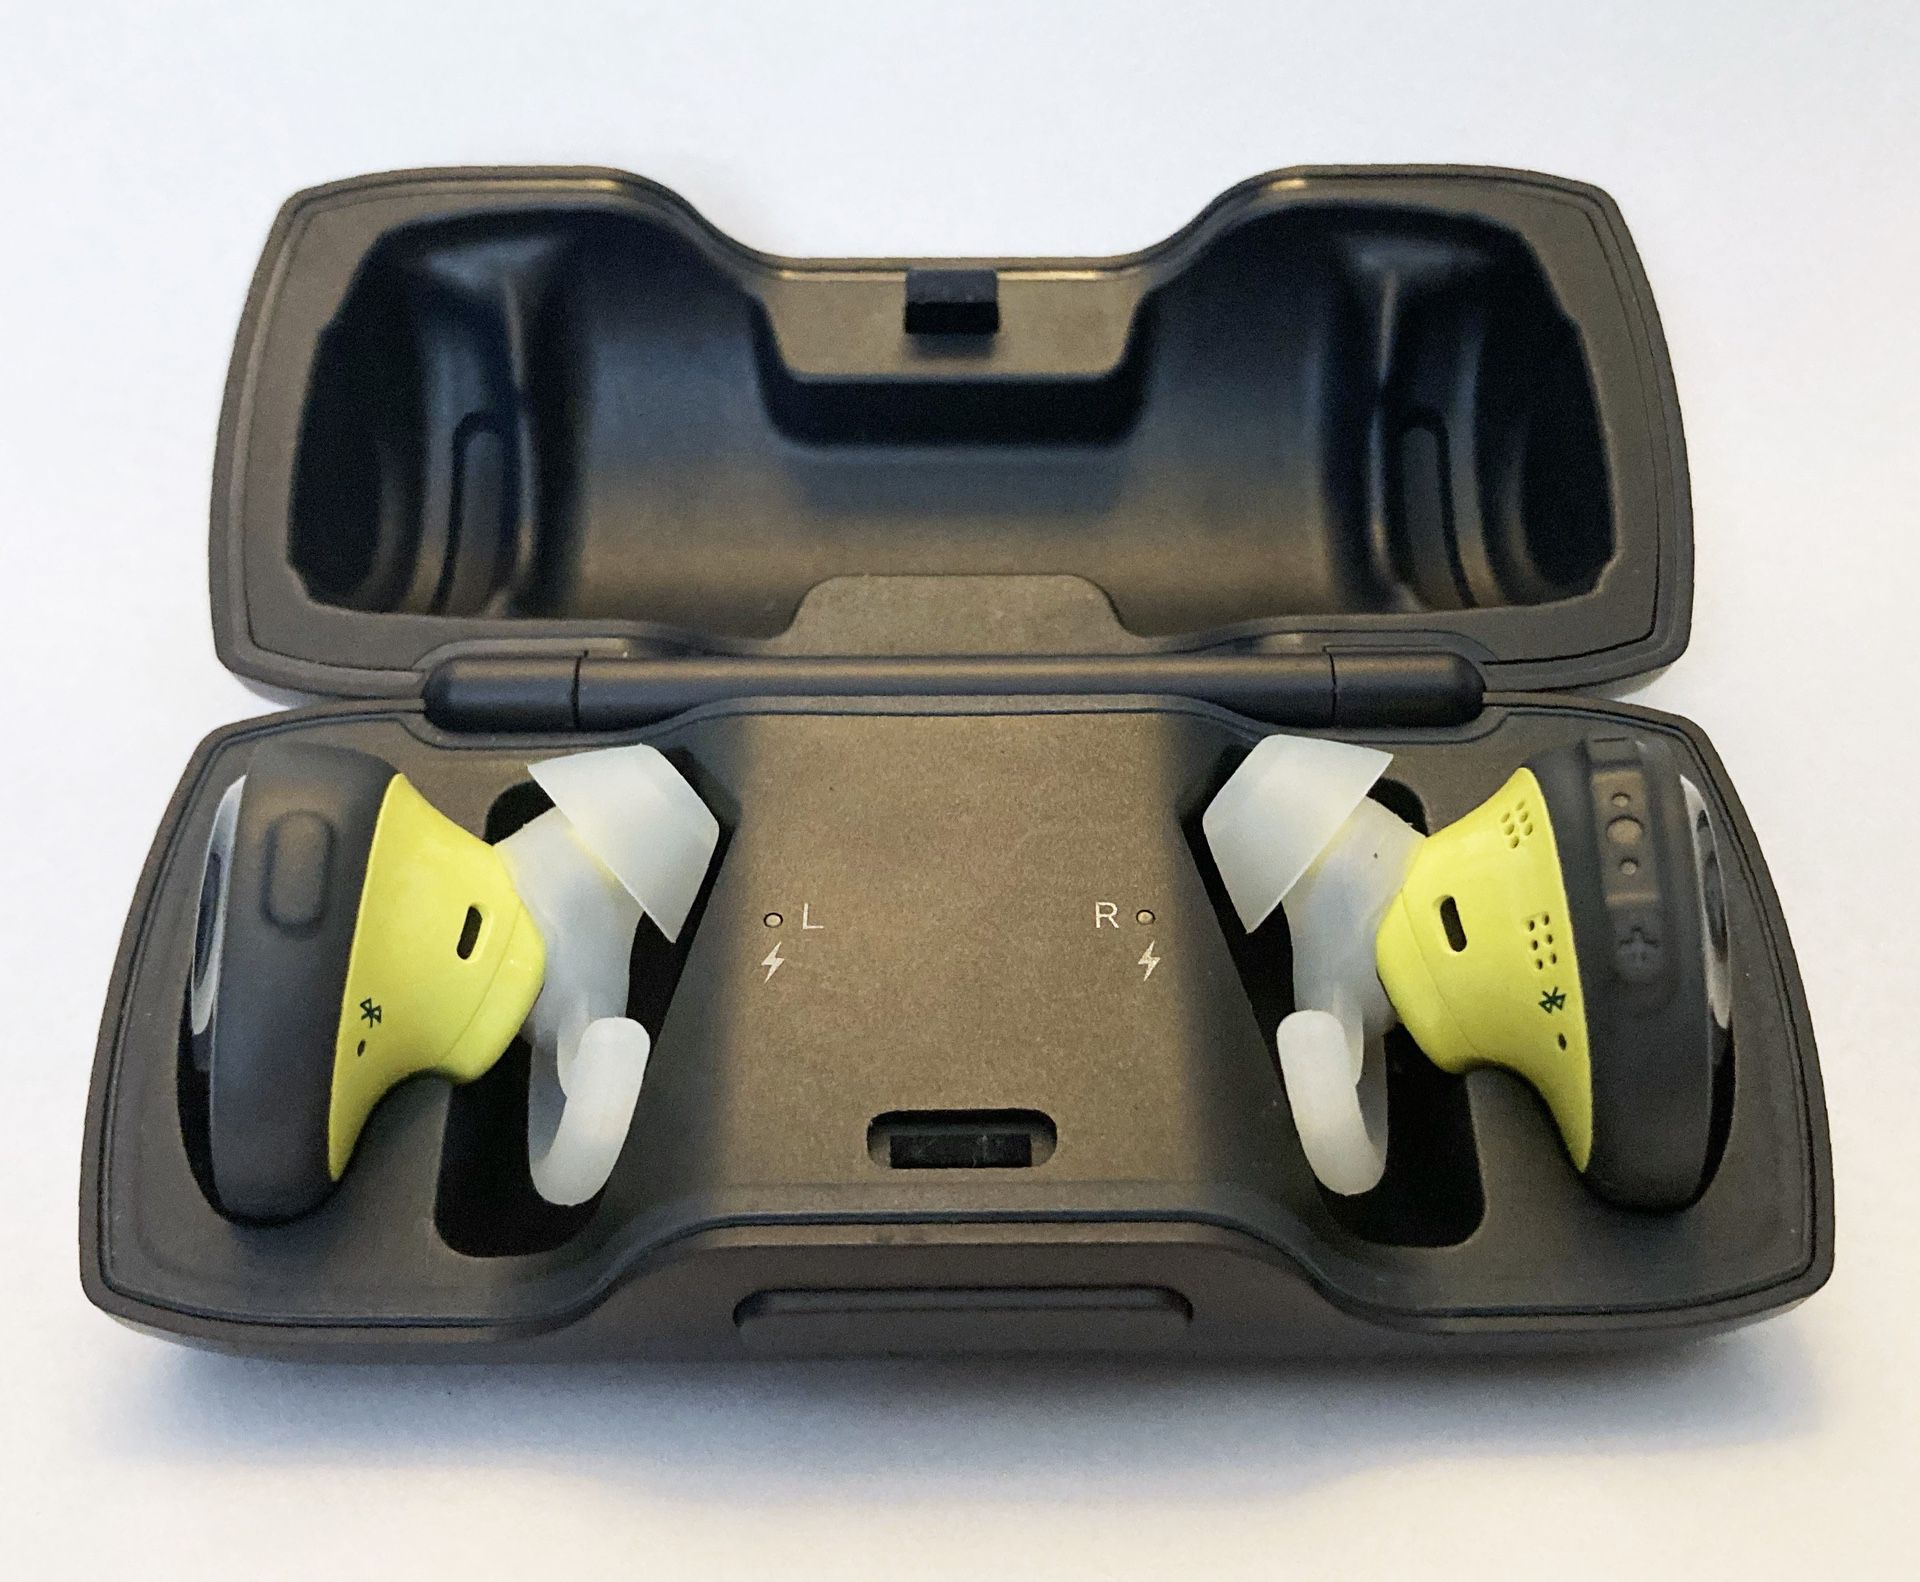 Bose SoundSport wireless headphones with charging case.